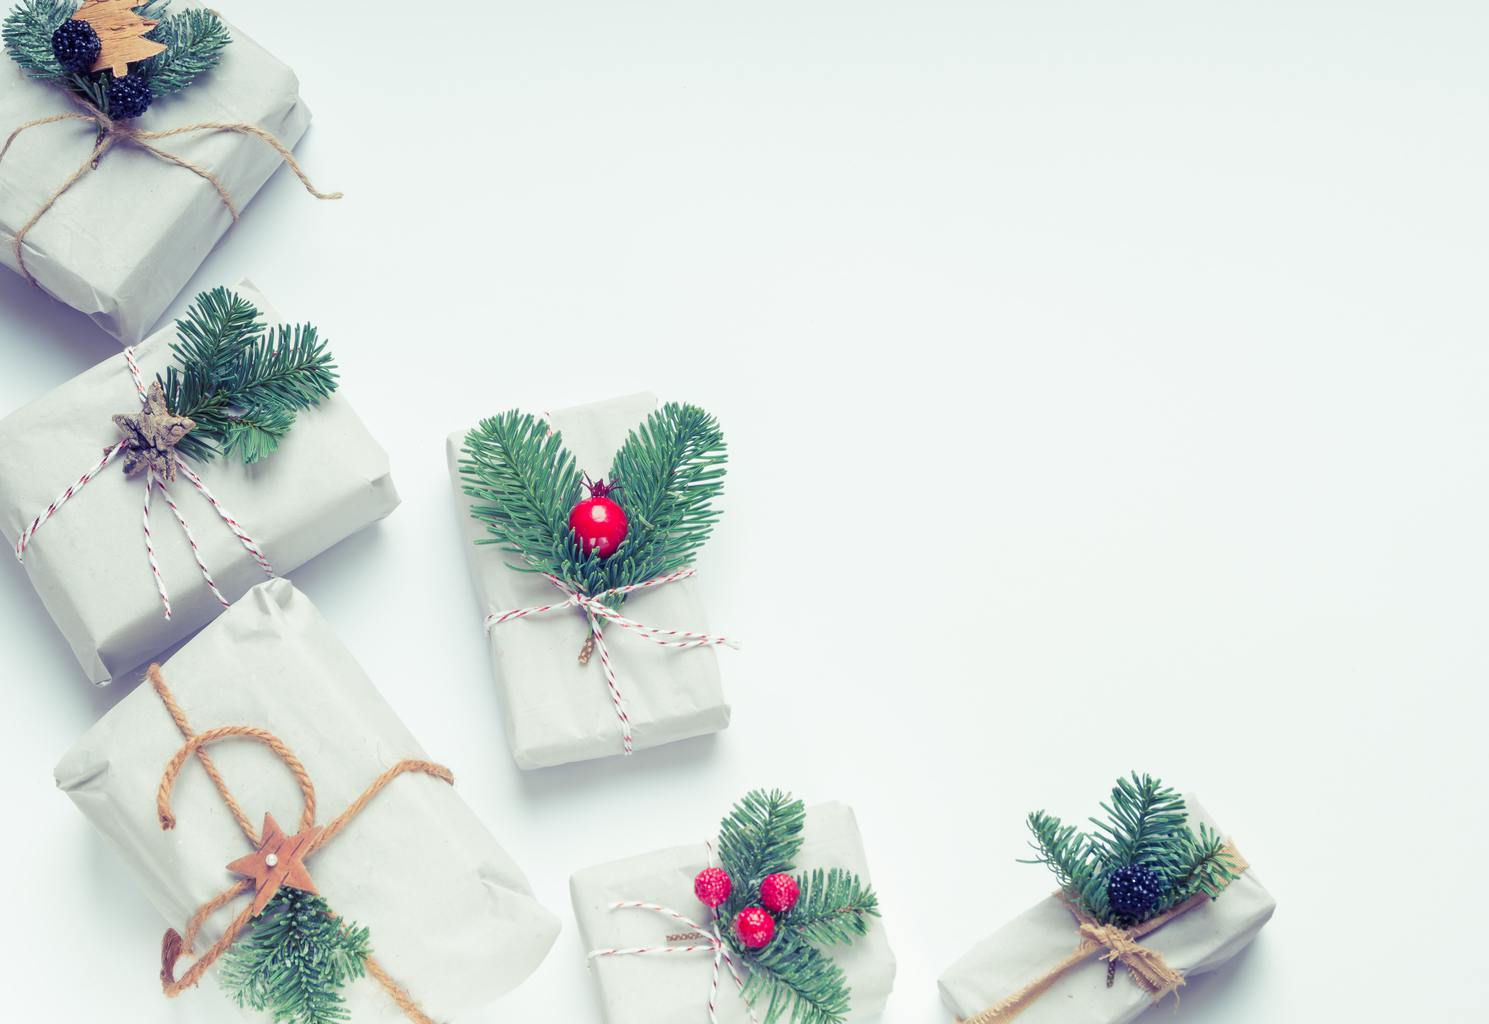 Should you be giving DIY gifts this holiday season?